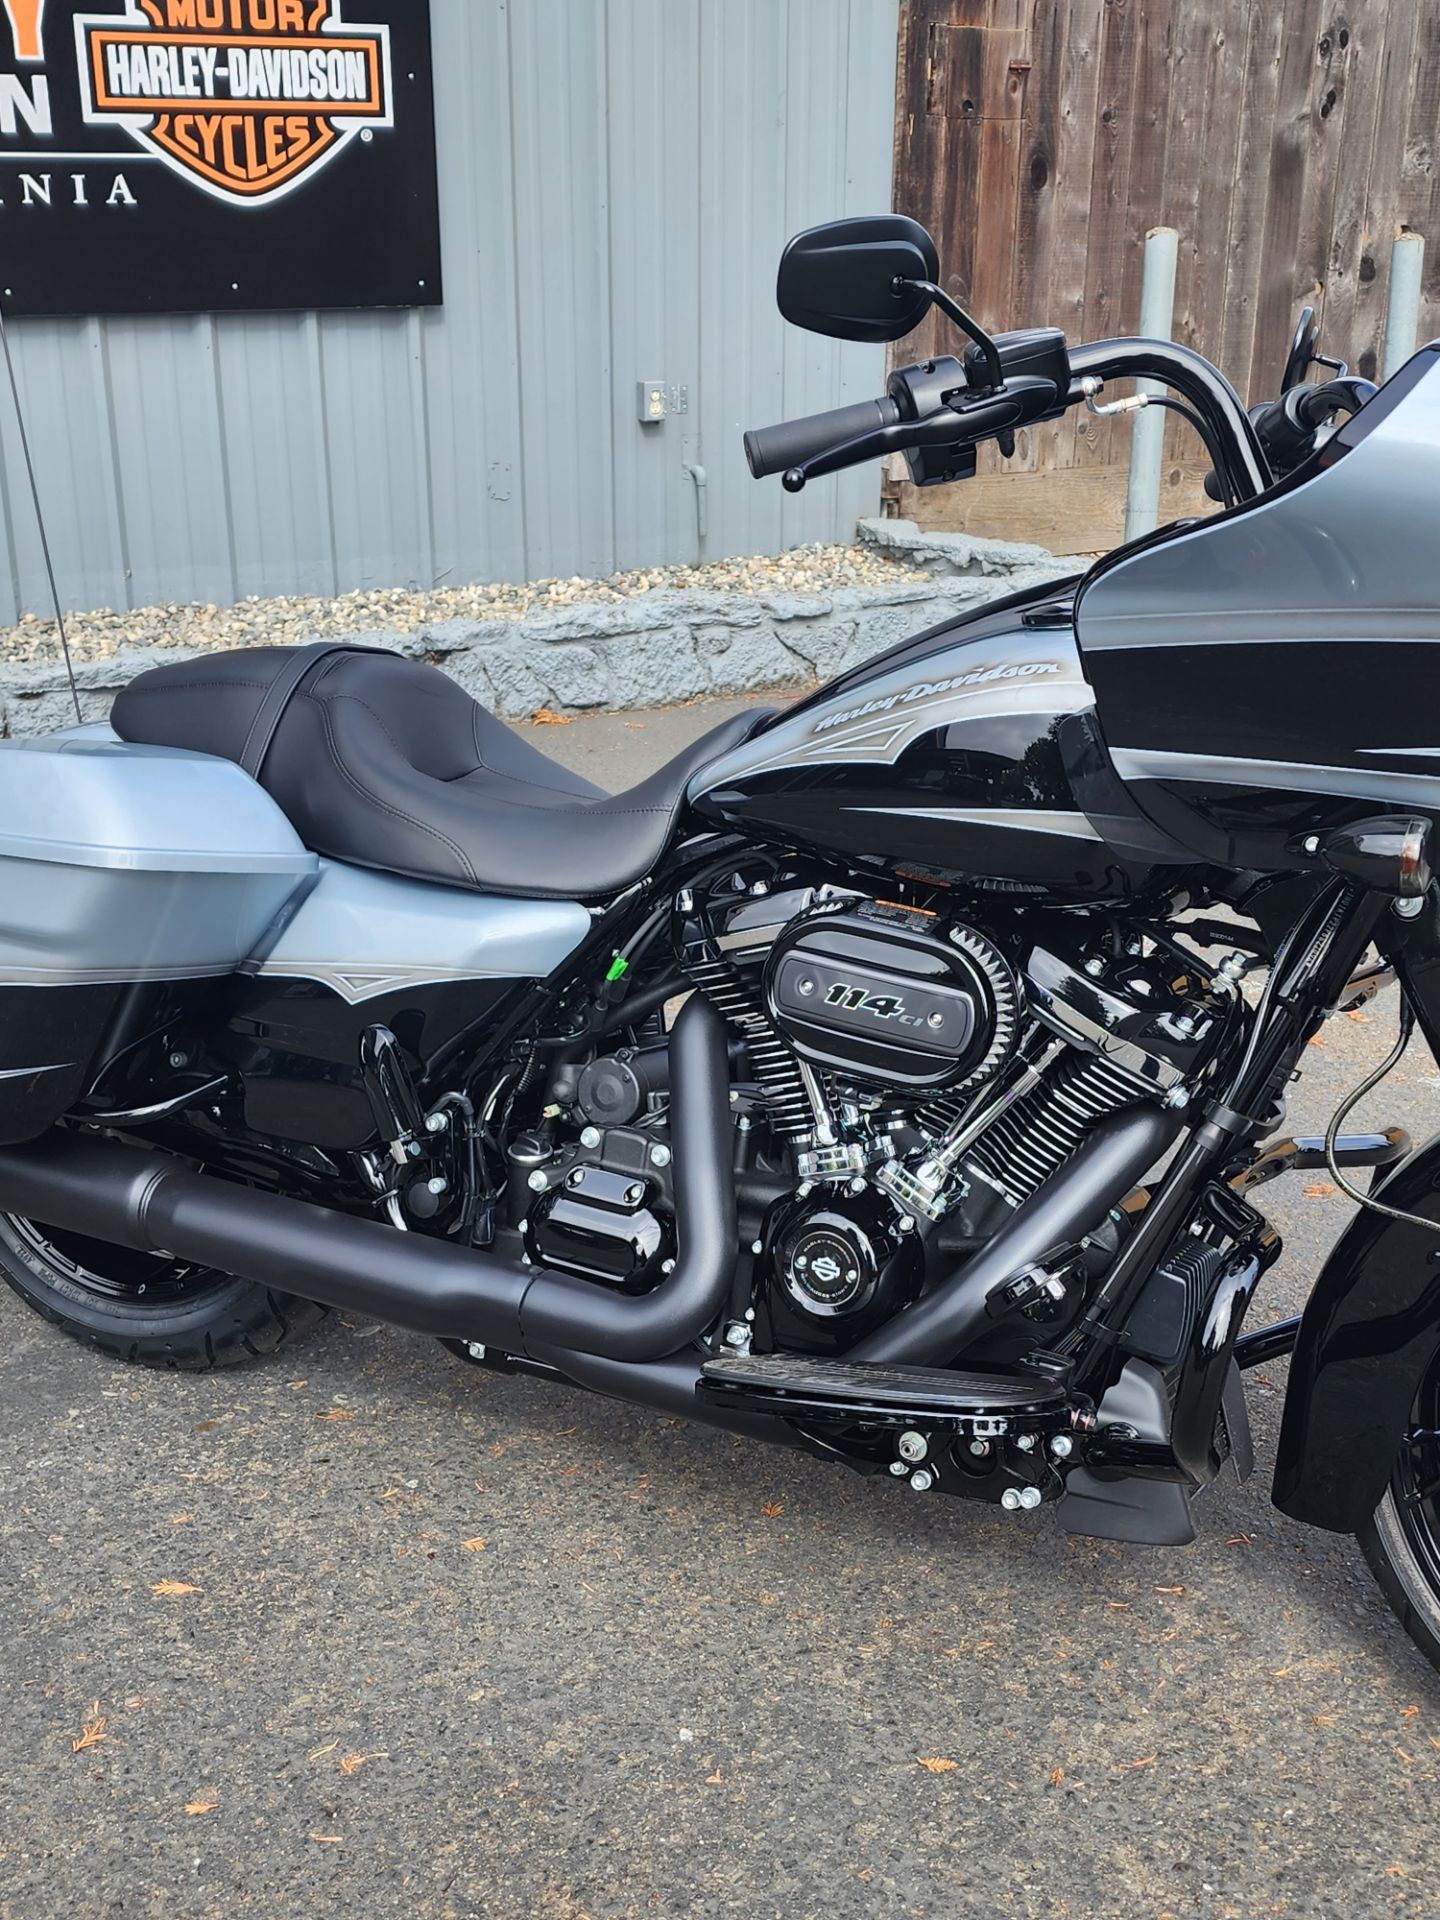 2023 Harley-Davidson Road Glide® Special in Cotati, California - Photo 4